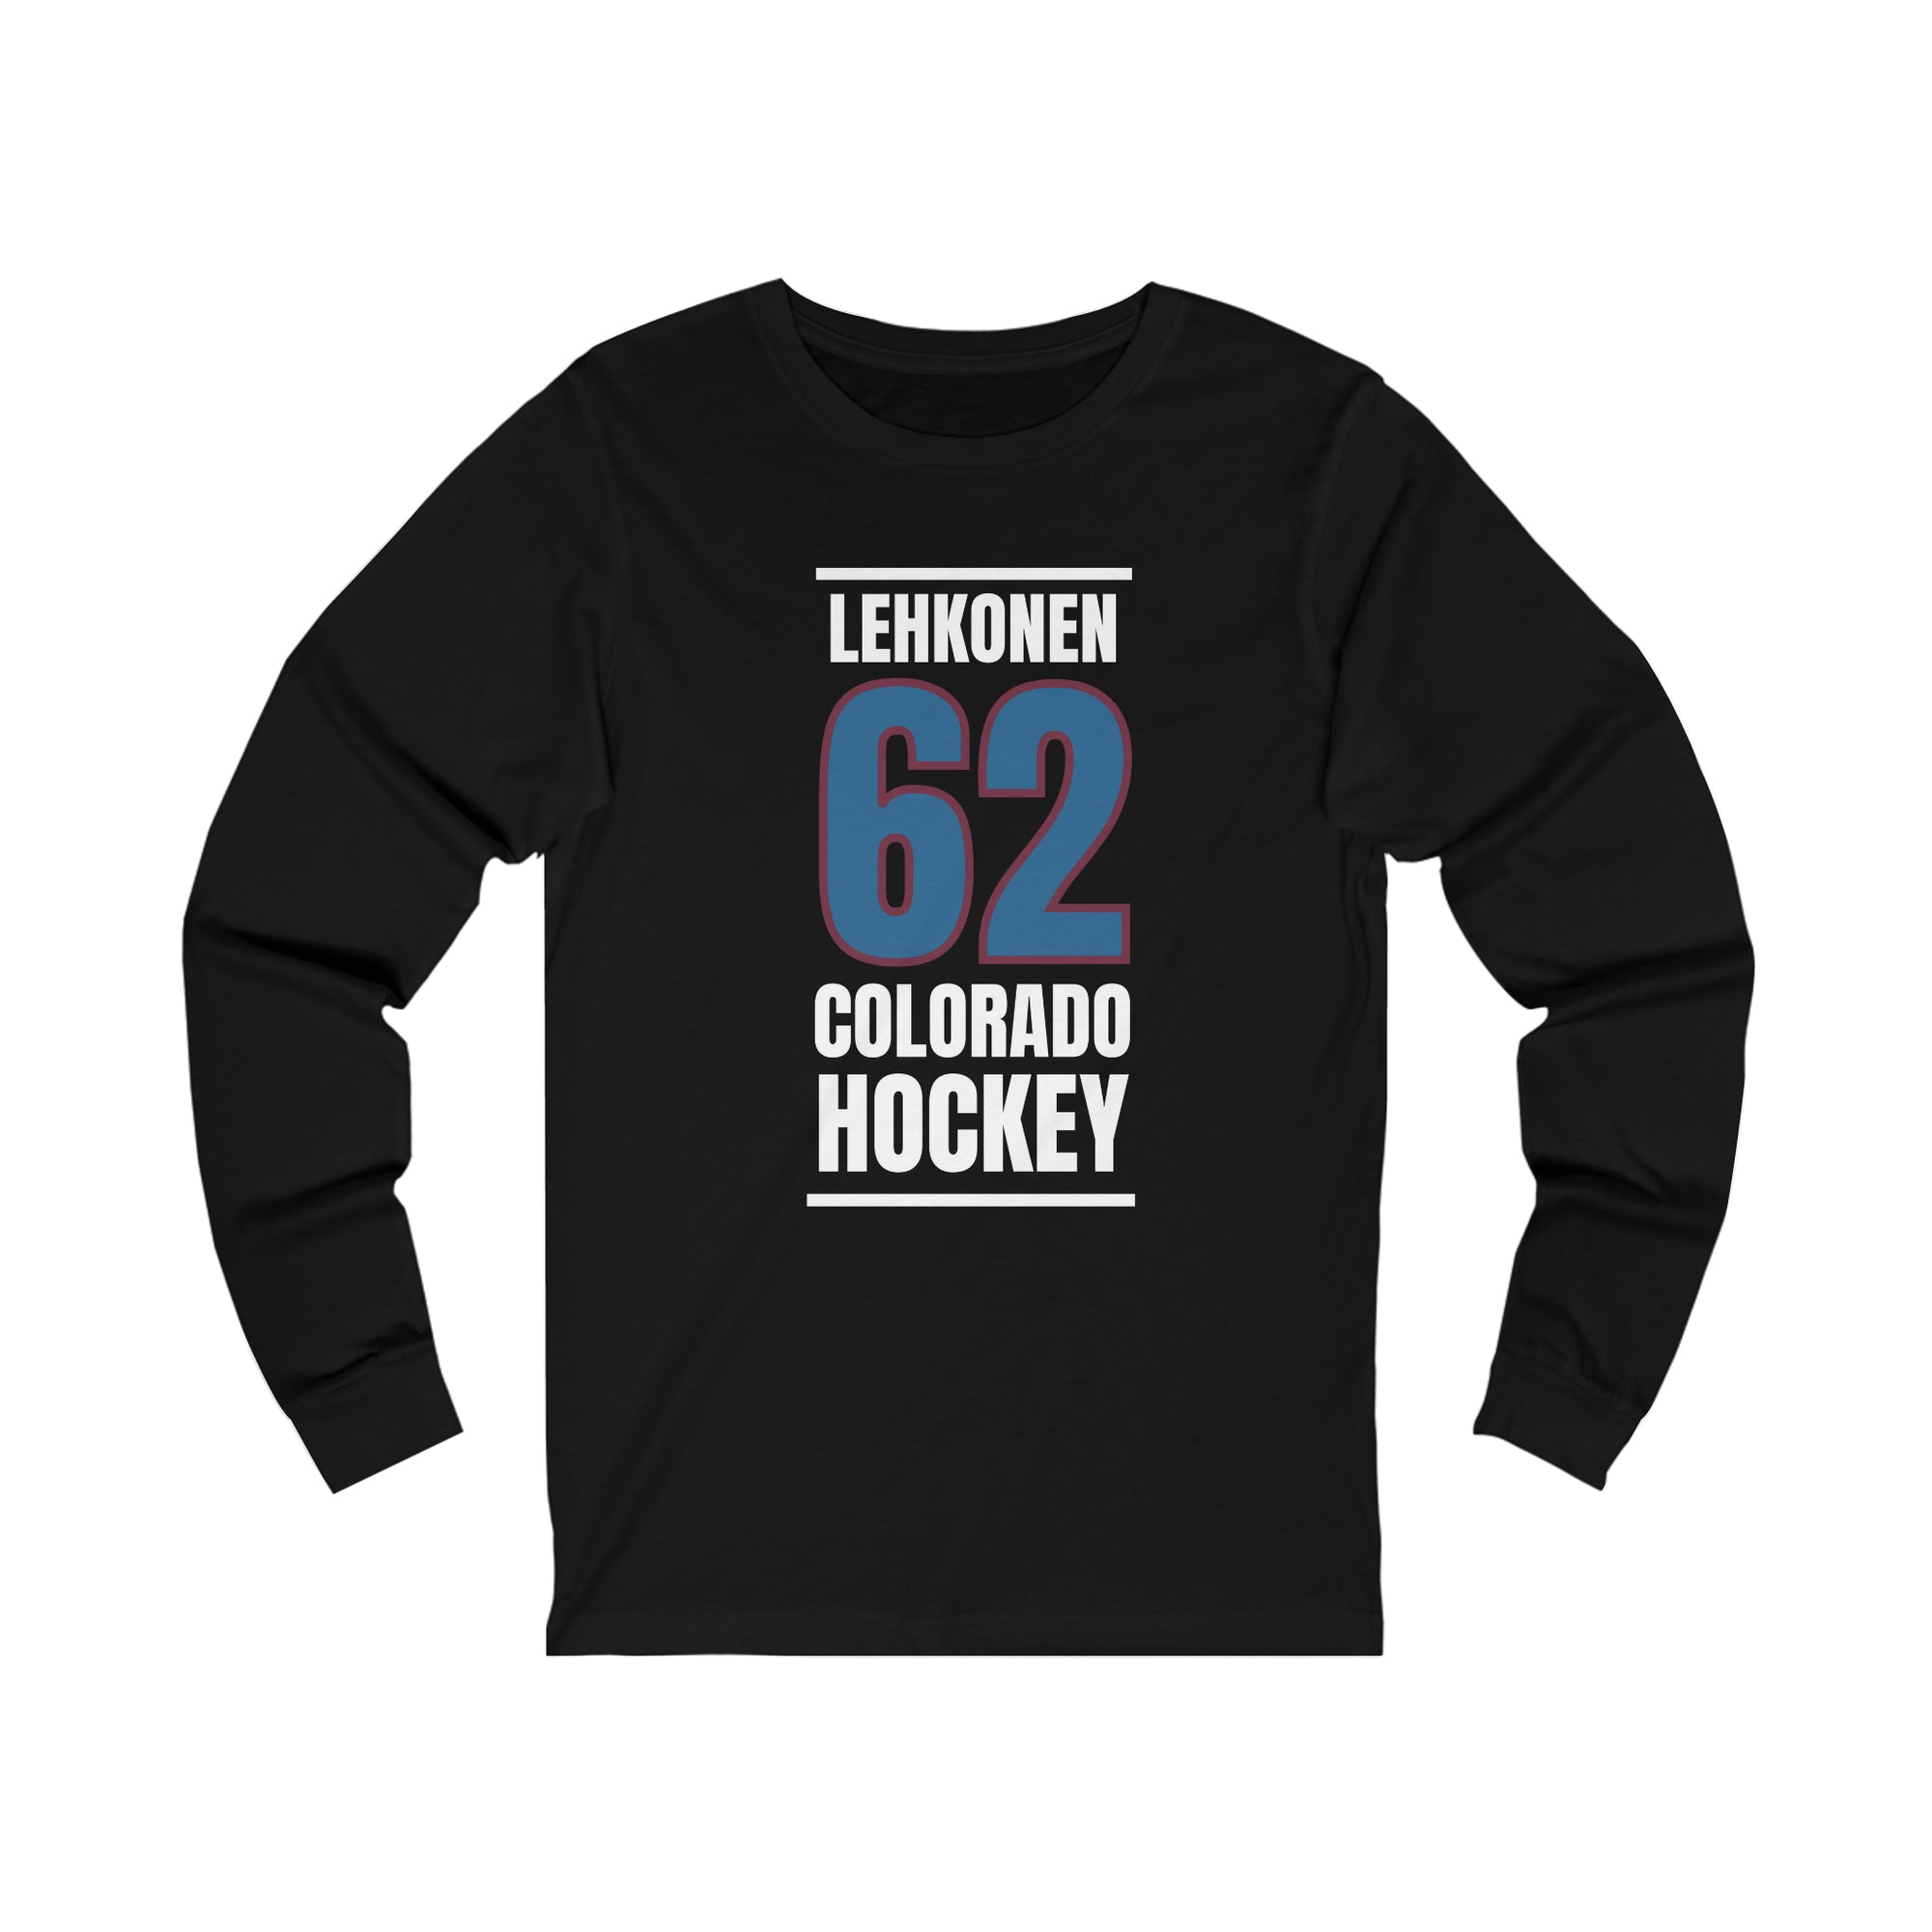 Lehkonen 62 Colorado Hockey Blue Vertical Design Unisex Jersey Long Sleeve Shirt